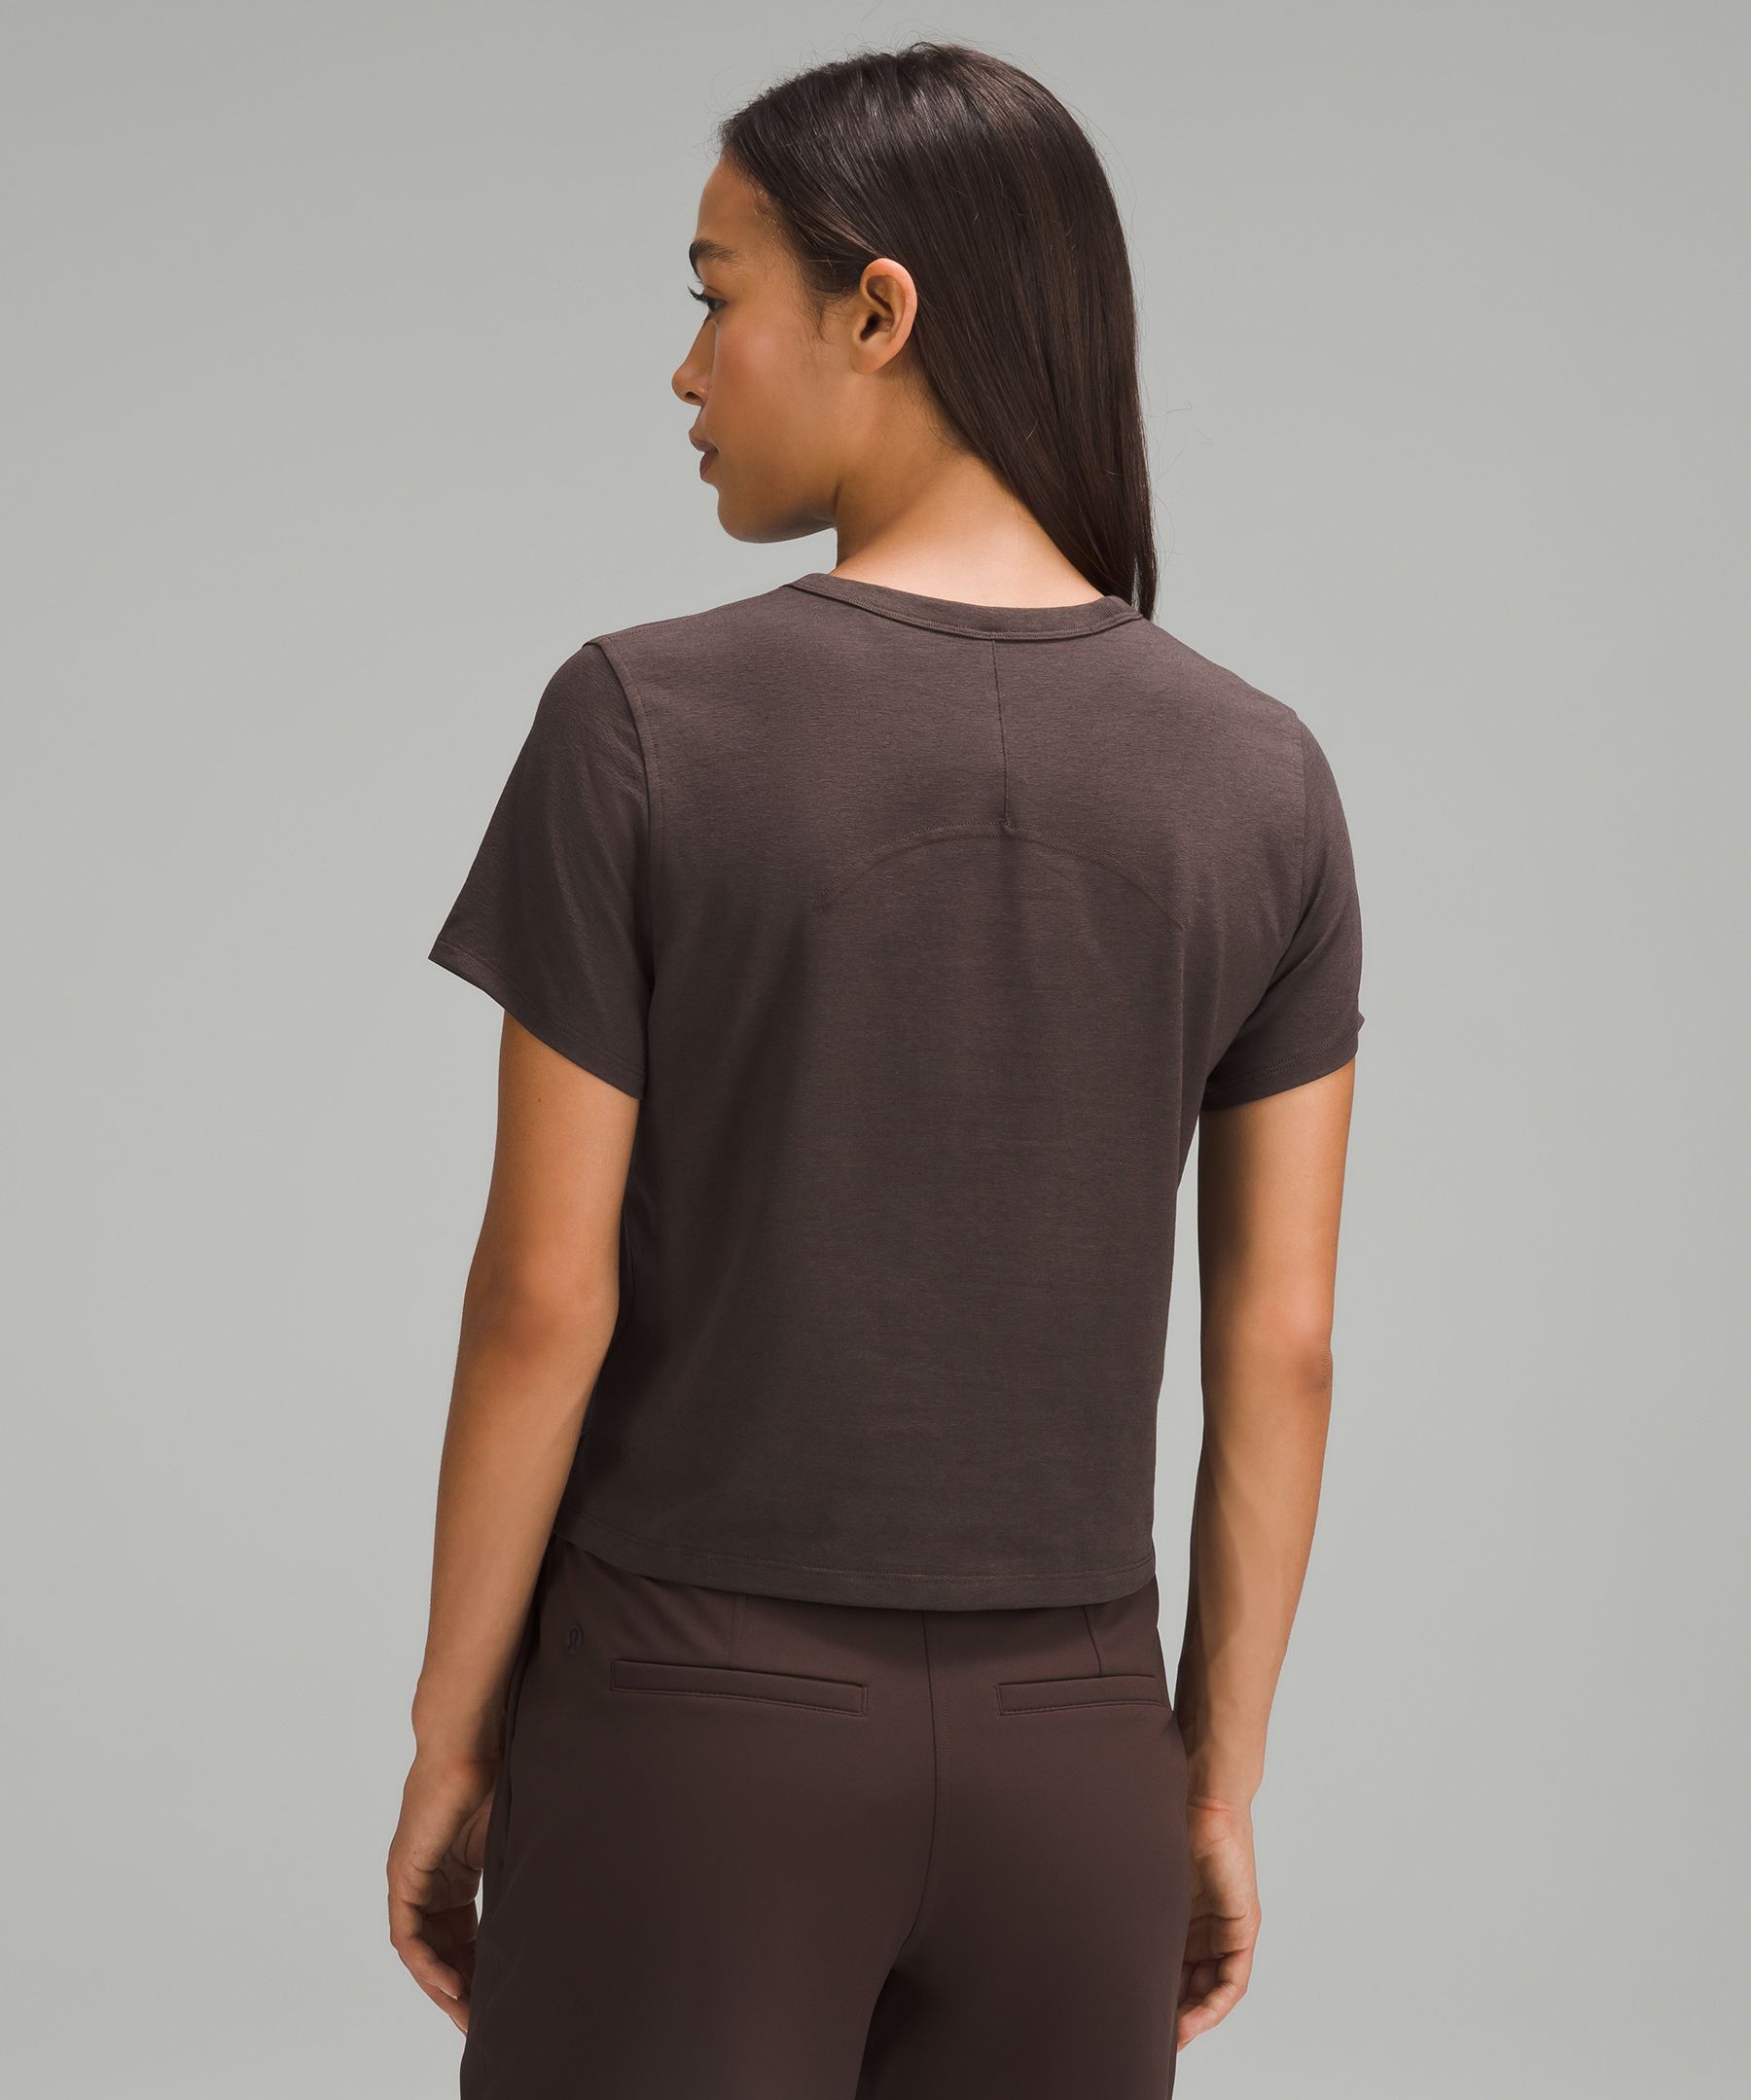 Classic-Fit Cotton-Blend T-Shirt, Women's Short Sleeve Shirts & Tee's